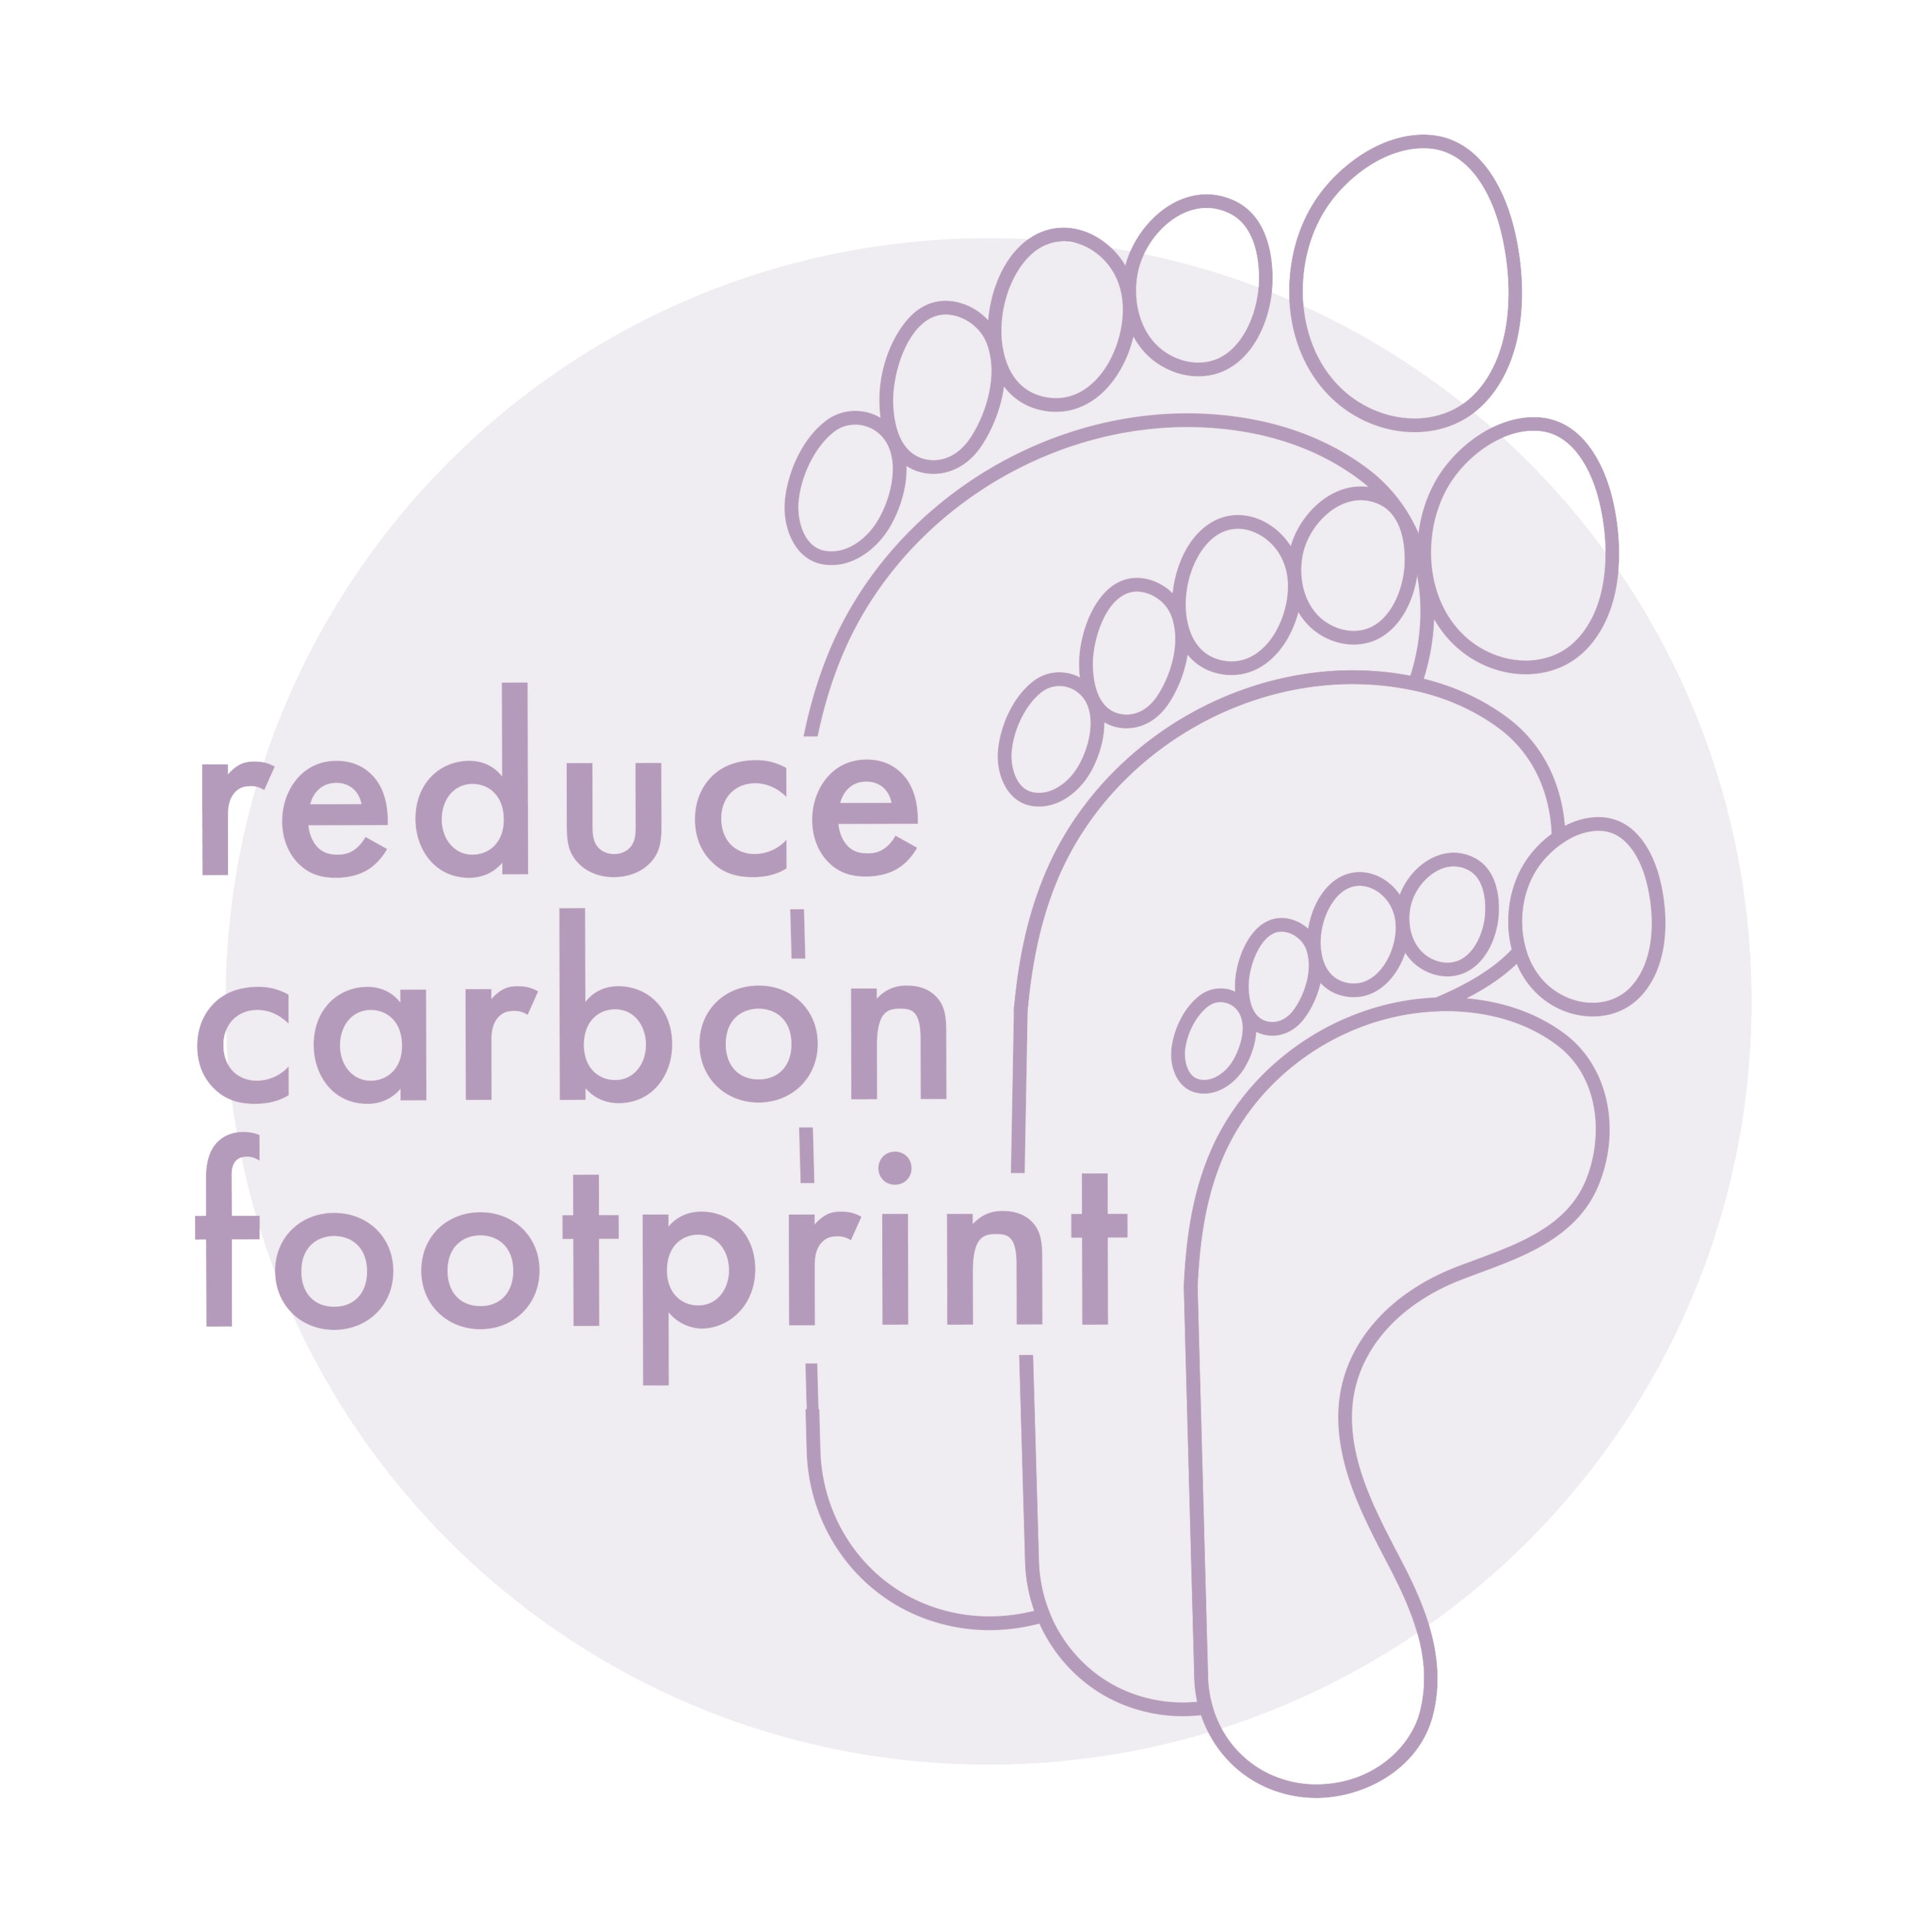 Carbon Reducing Footprint image